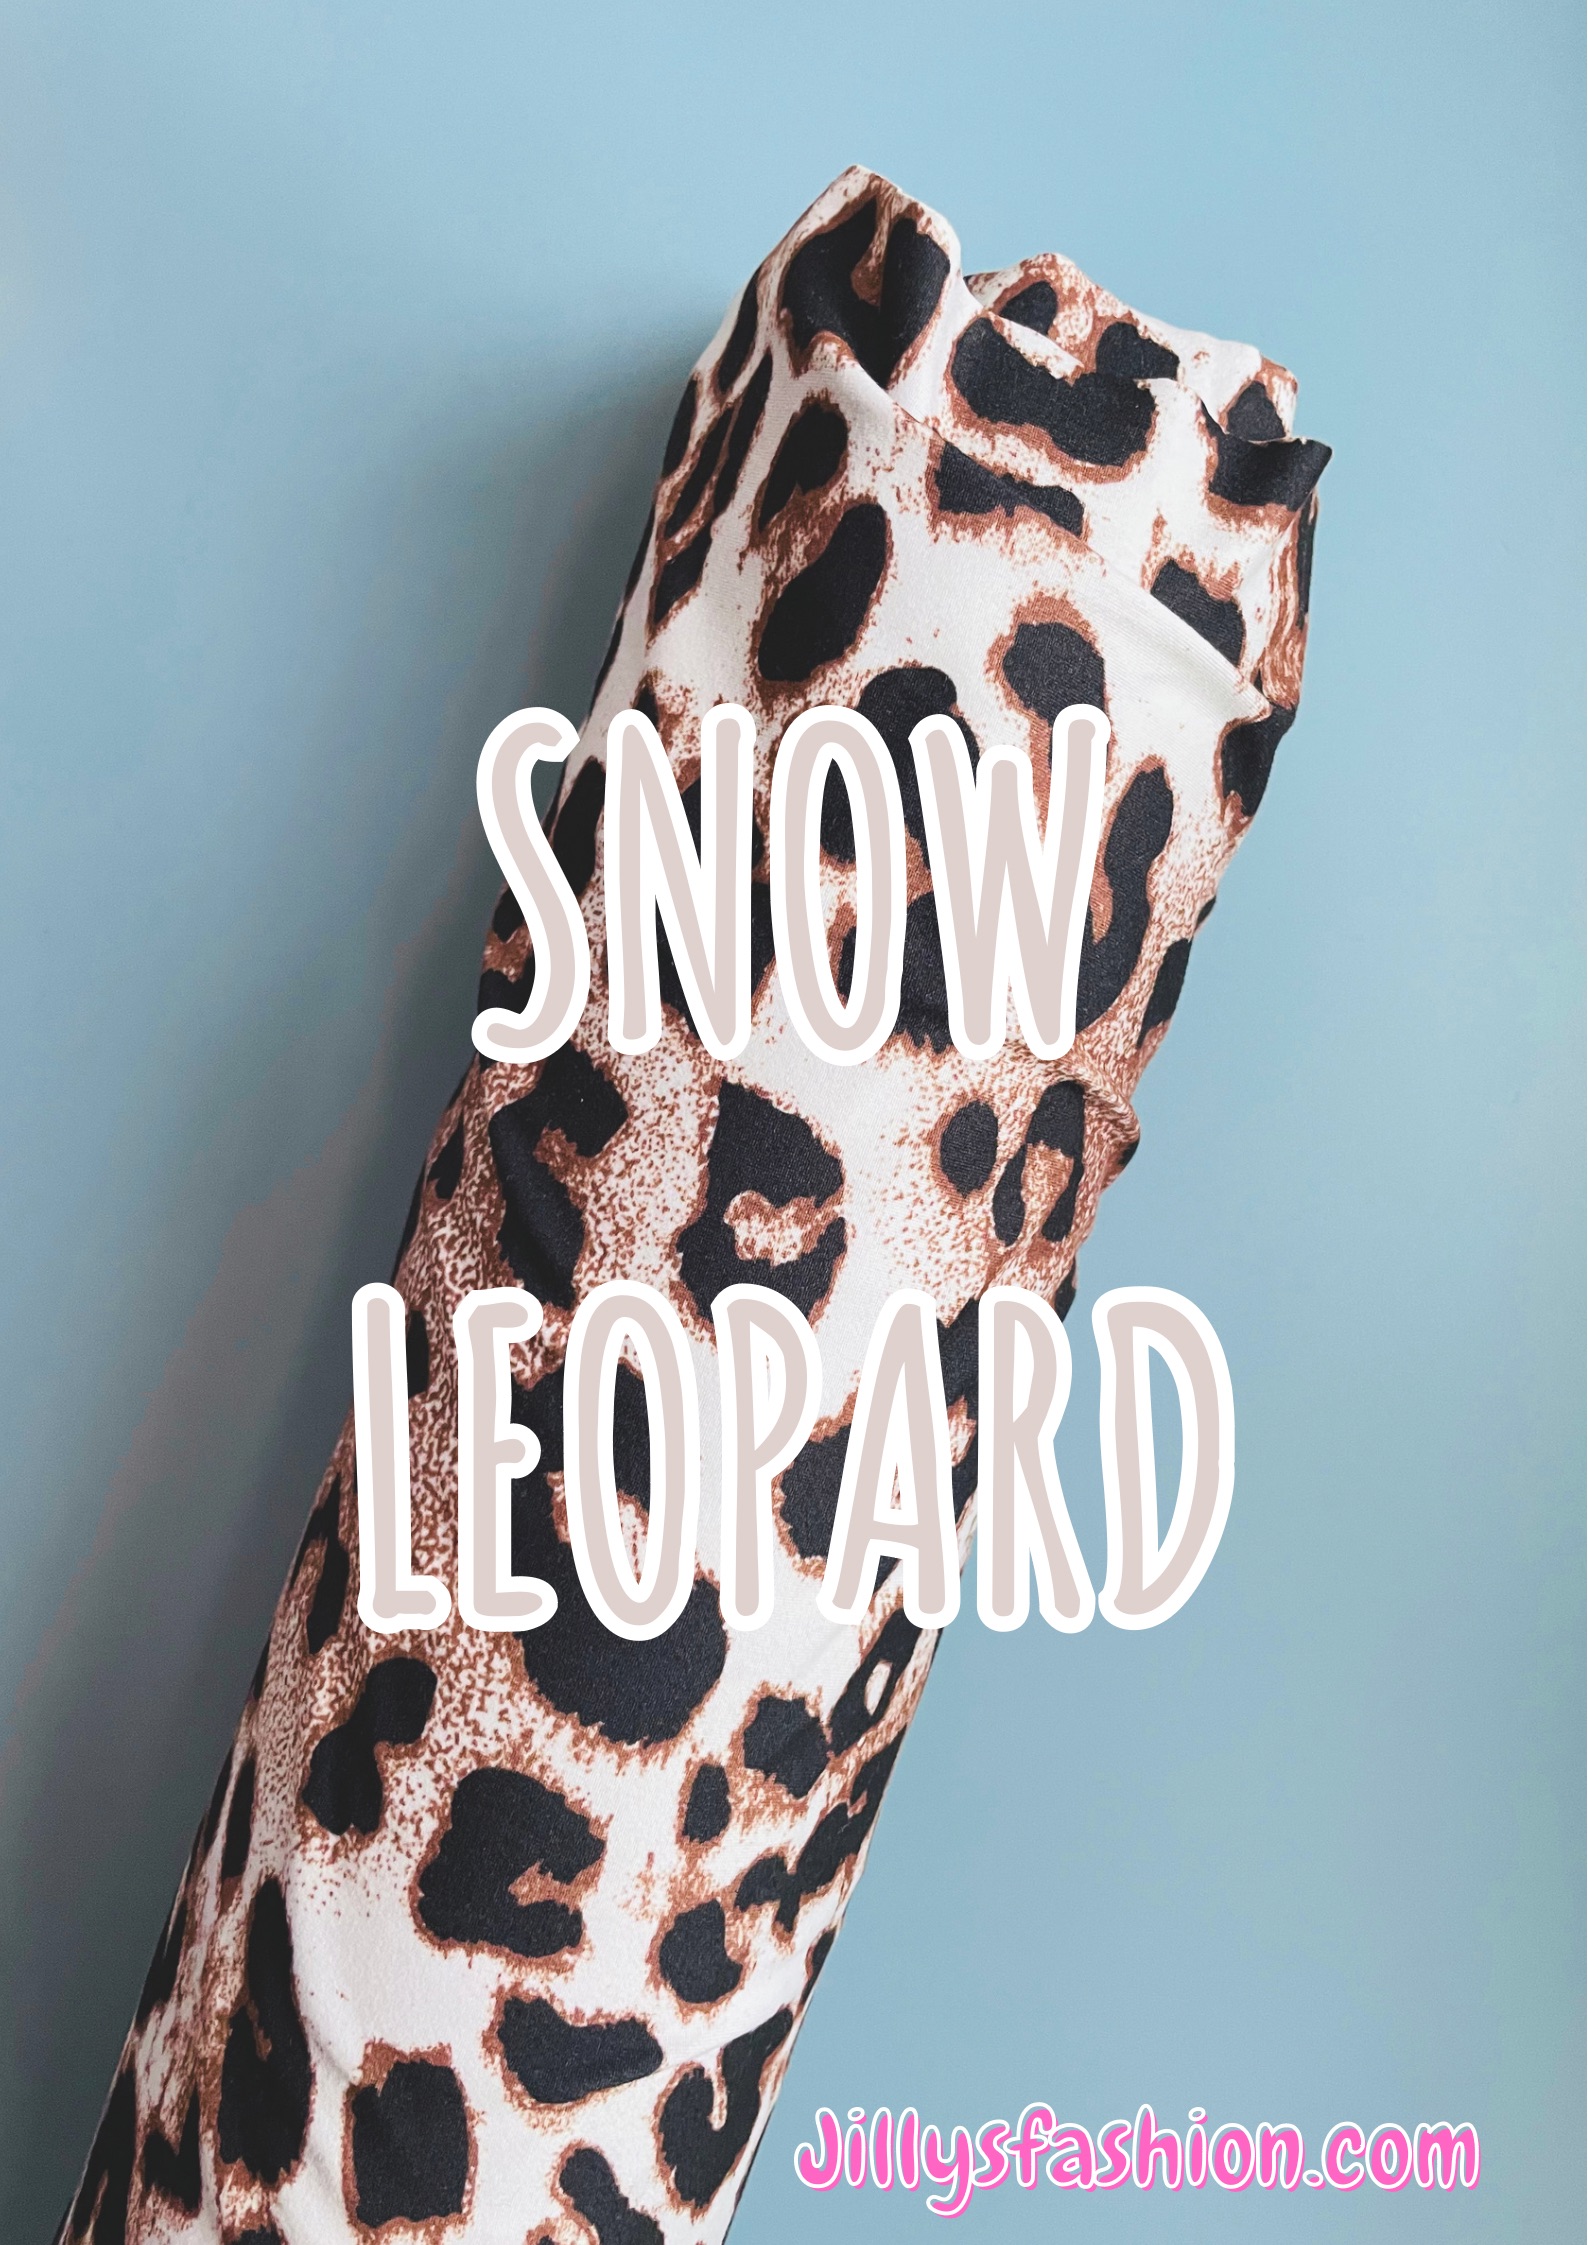 snow leopard Jilly's fashion